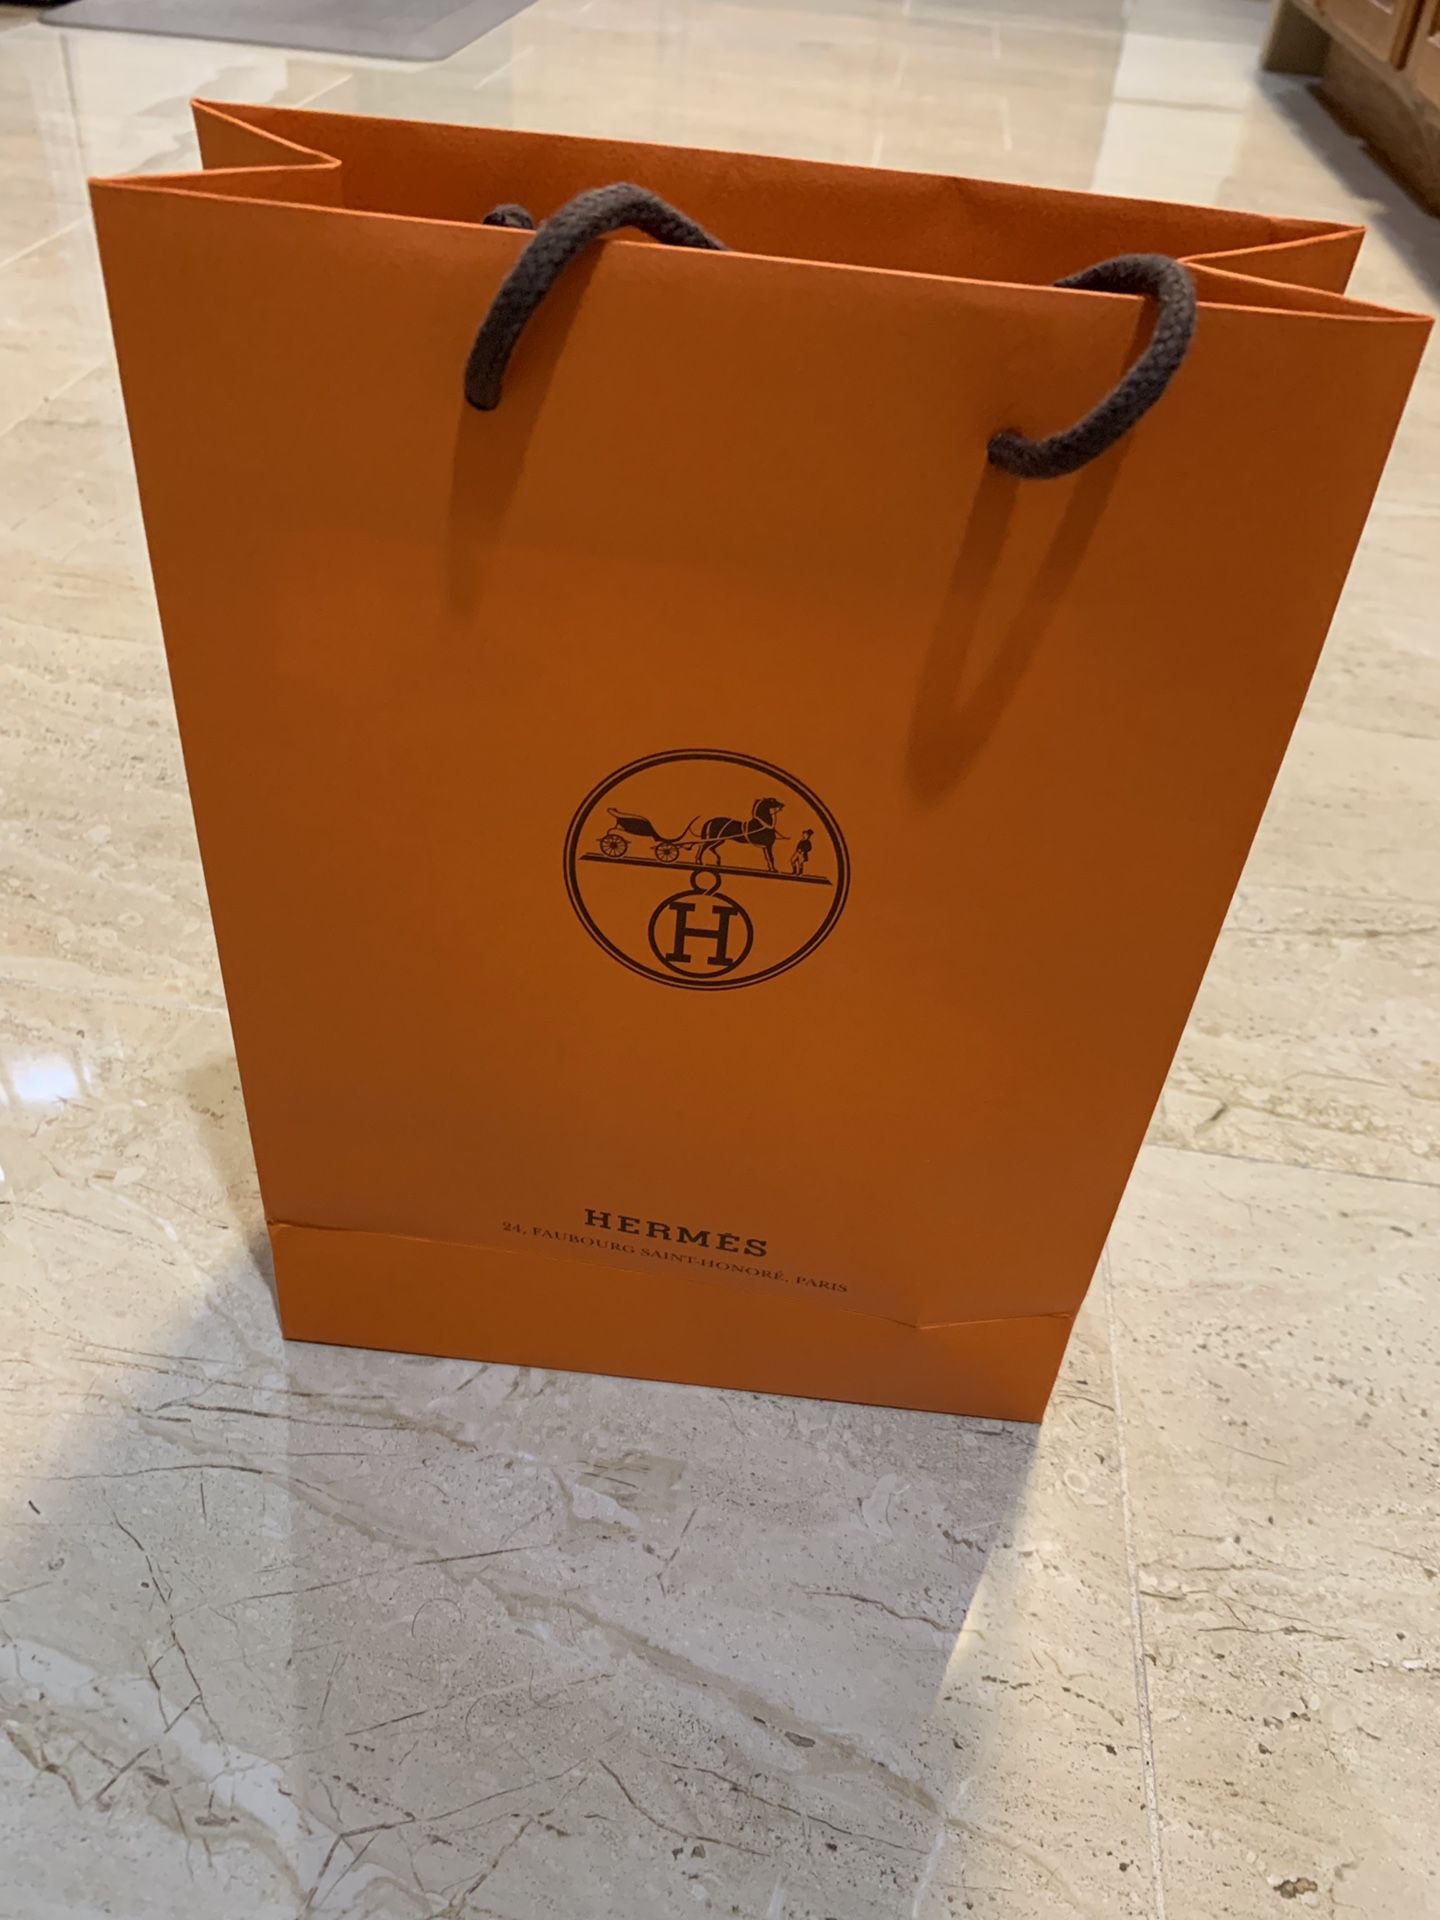 Authentic Hermès shopping bag